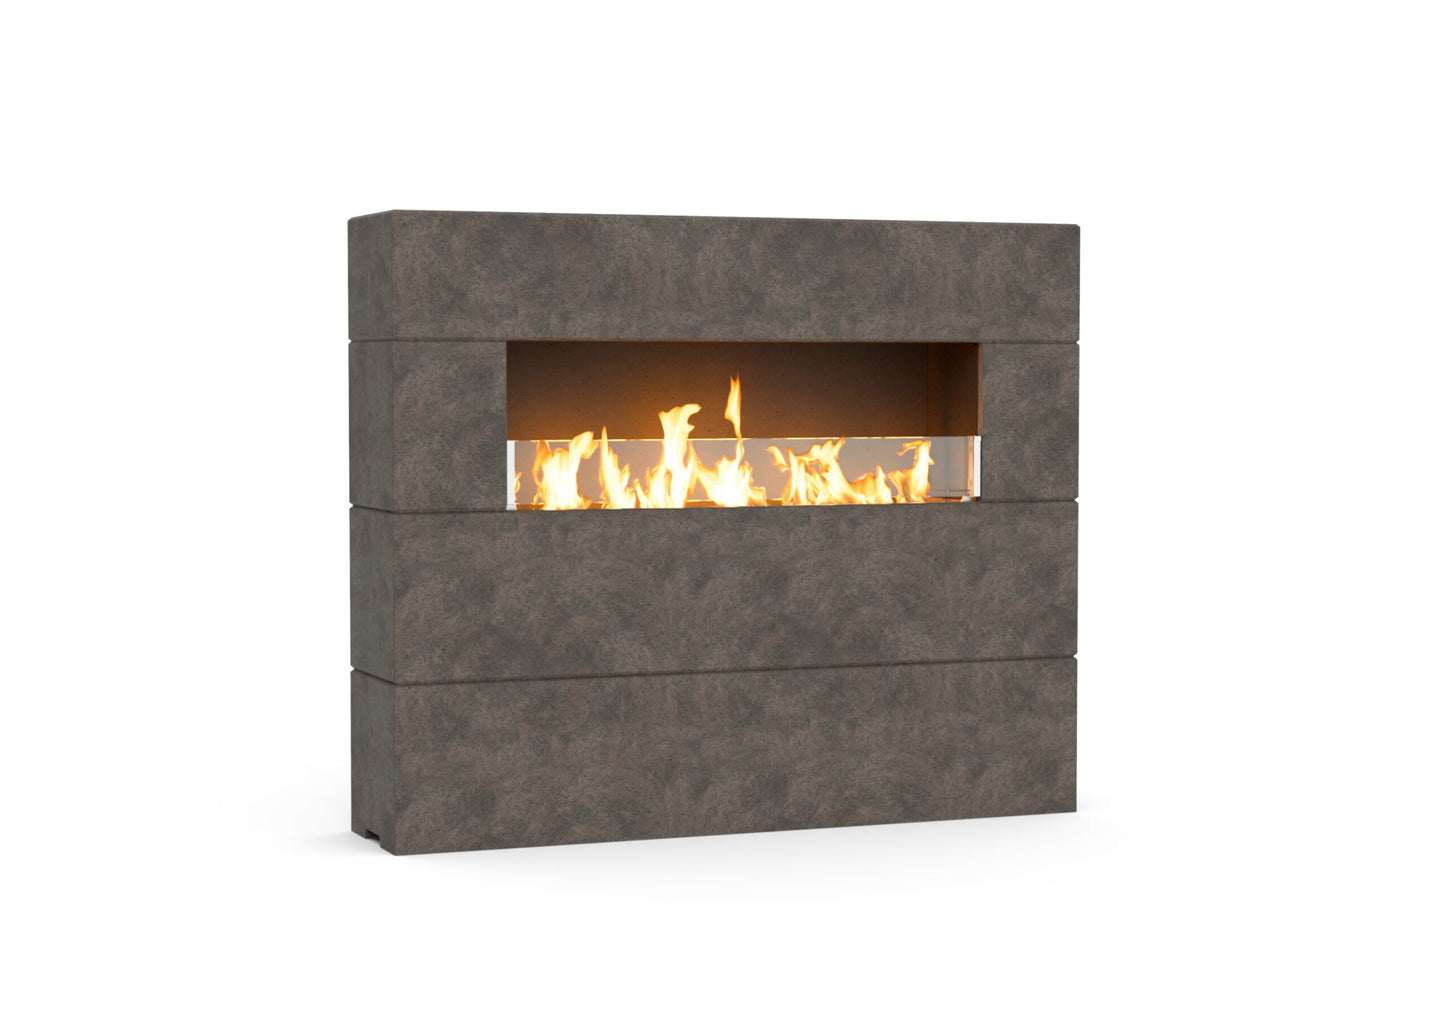 American Fyre Designs Milan Tall 60" Dark Basalt Propane Gas Fireplace with Manual Flame Sensing Control